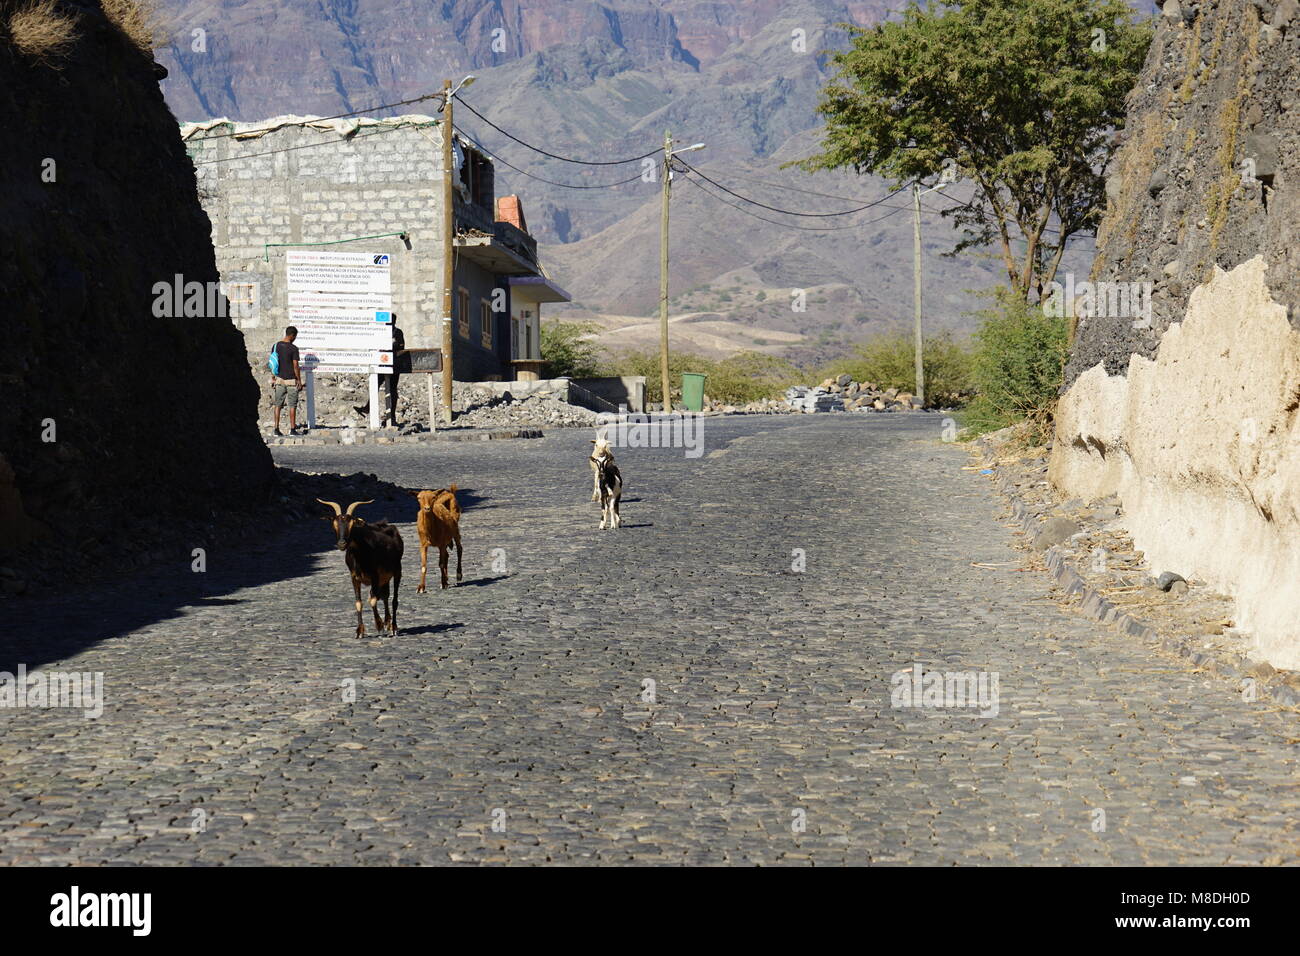 Goats on the street of Lagedos. Santo Antao Island, Cape Verde Stock Photo